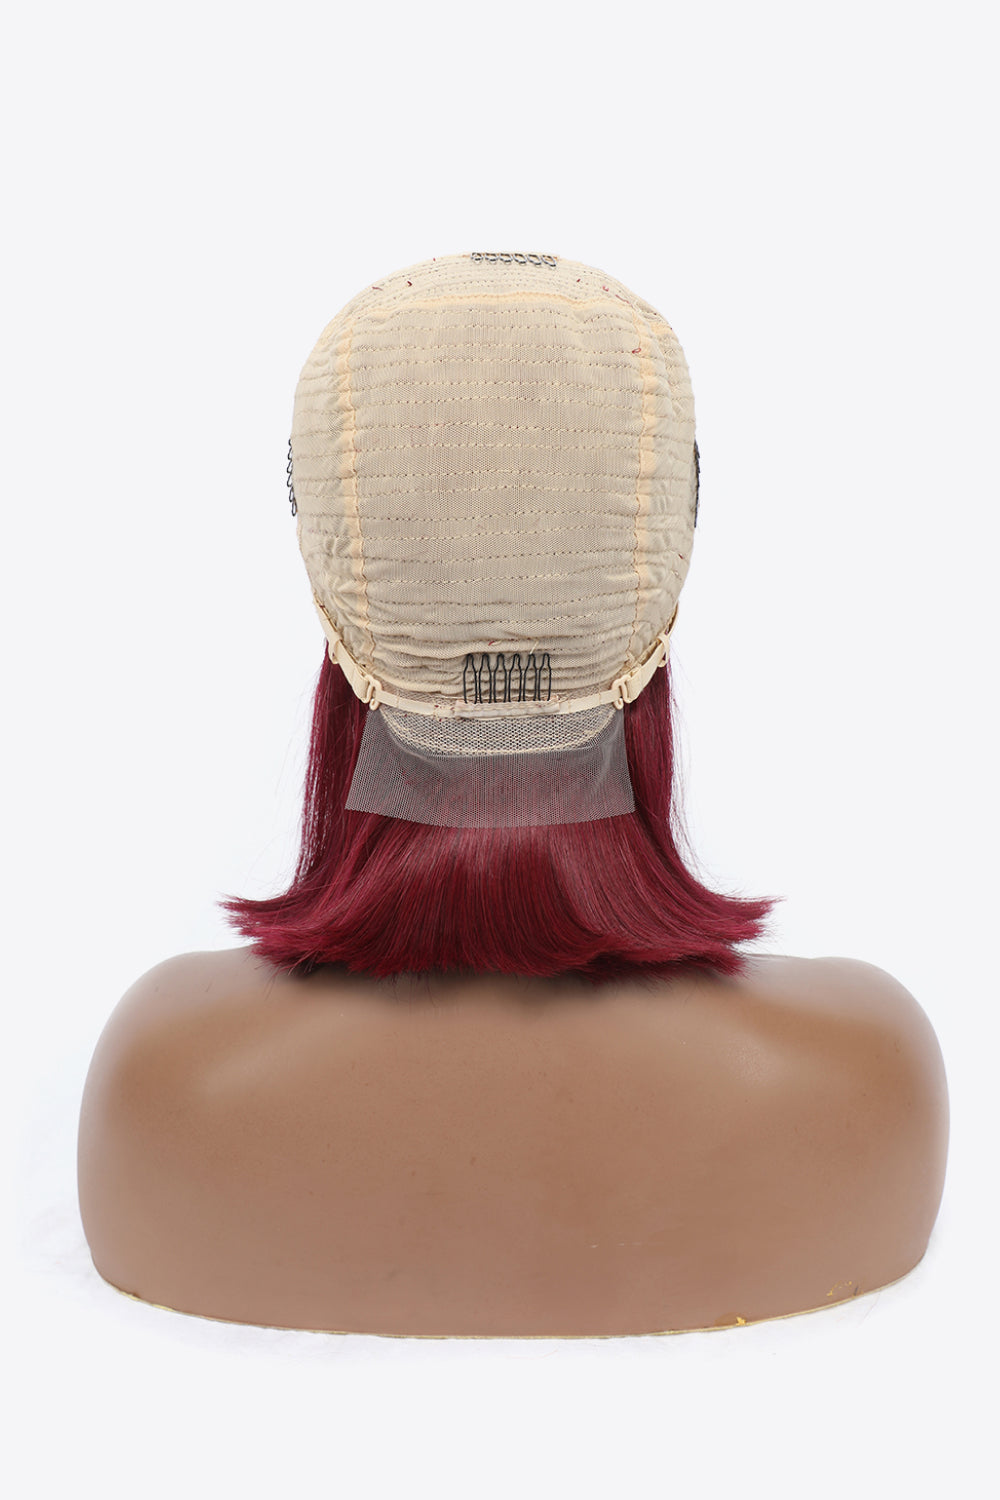 #99j Lace Front Wig